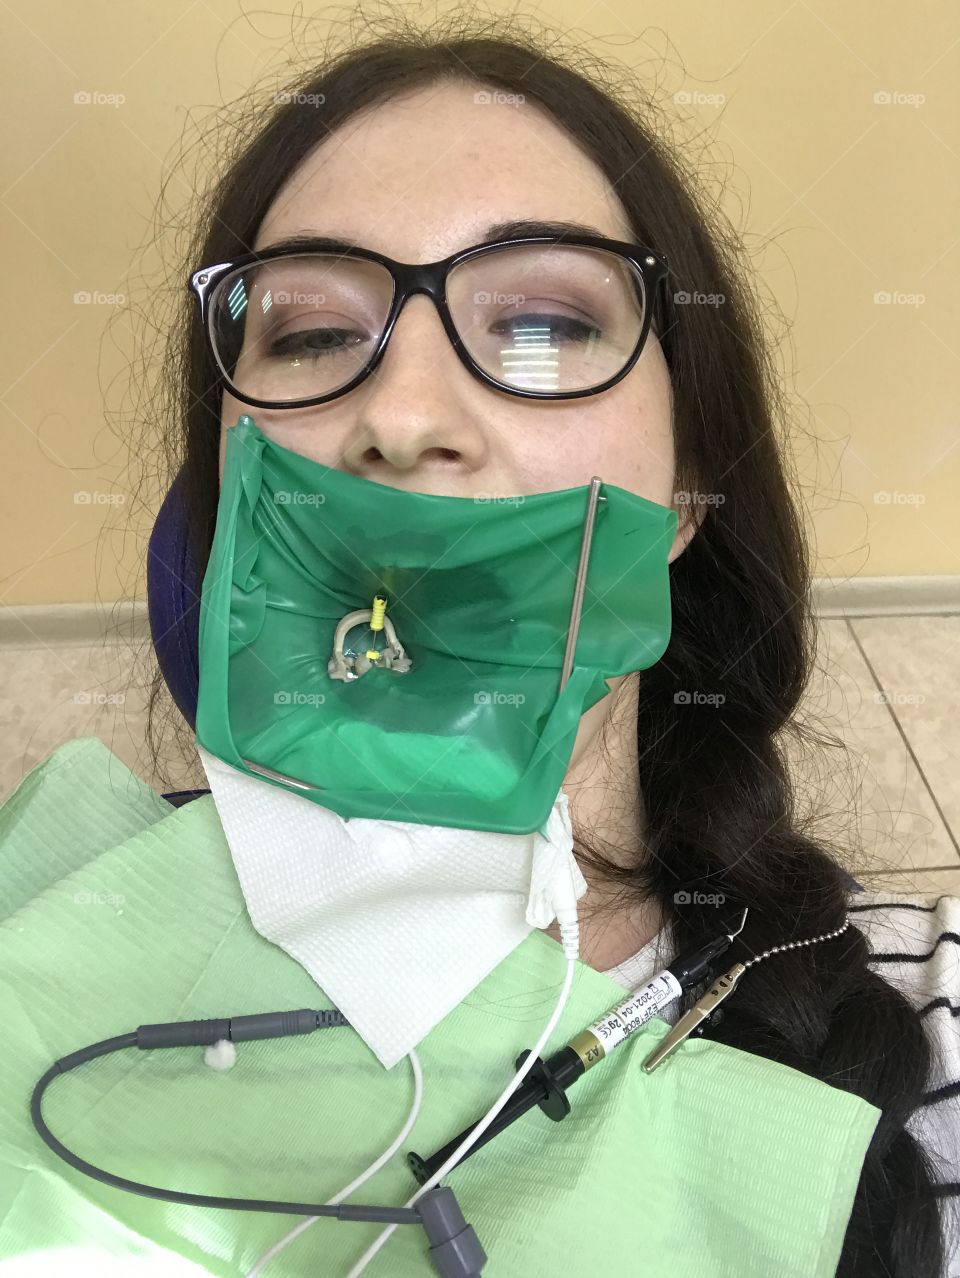 Girl visit a dentist. Healthcare